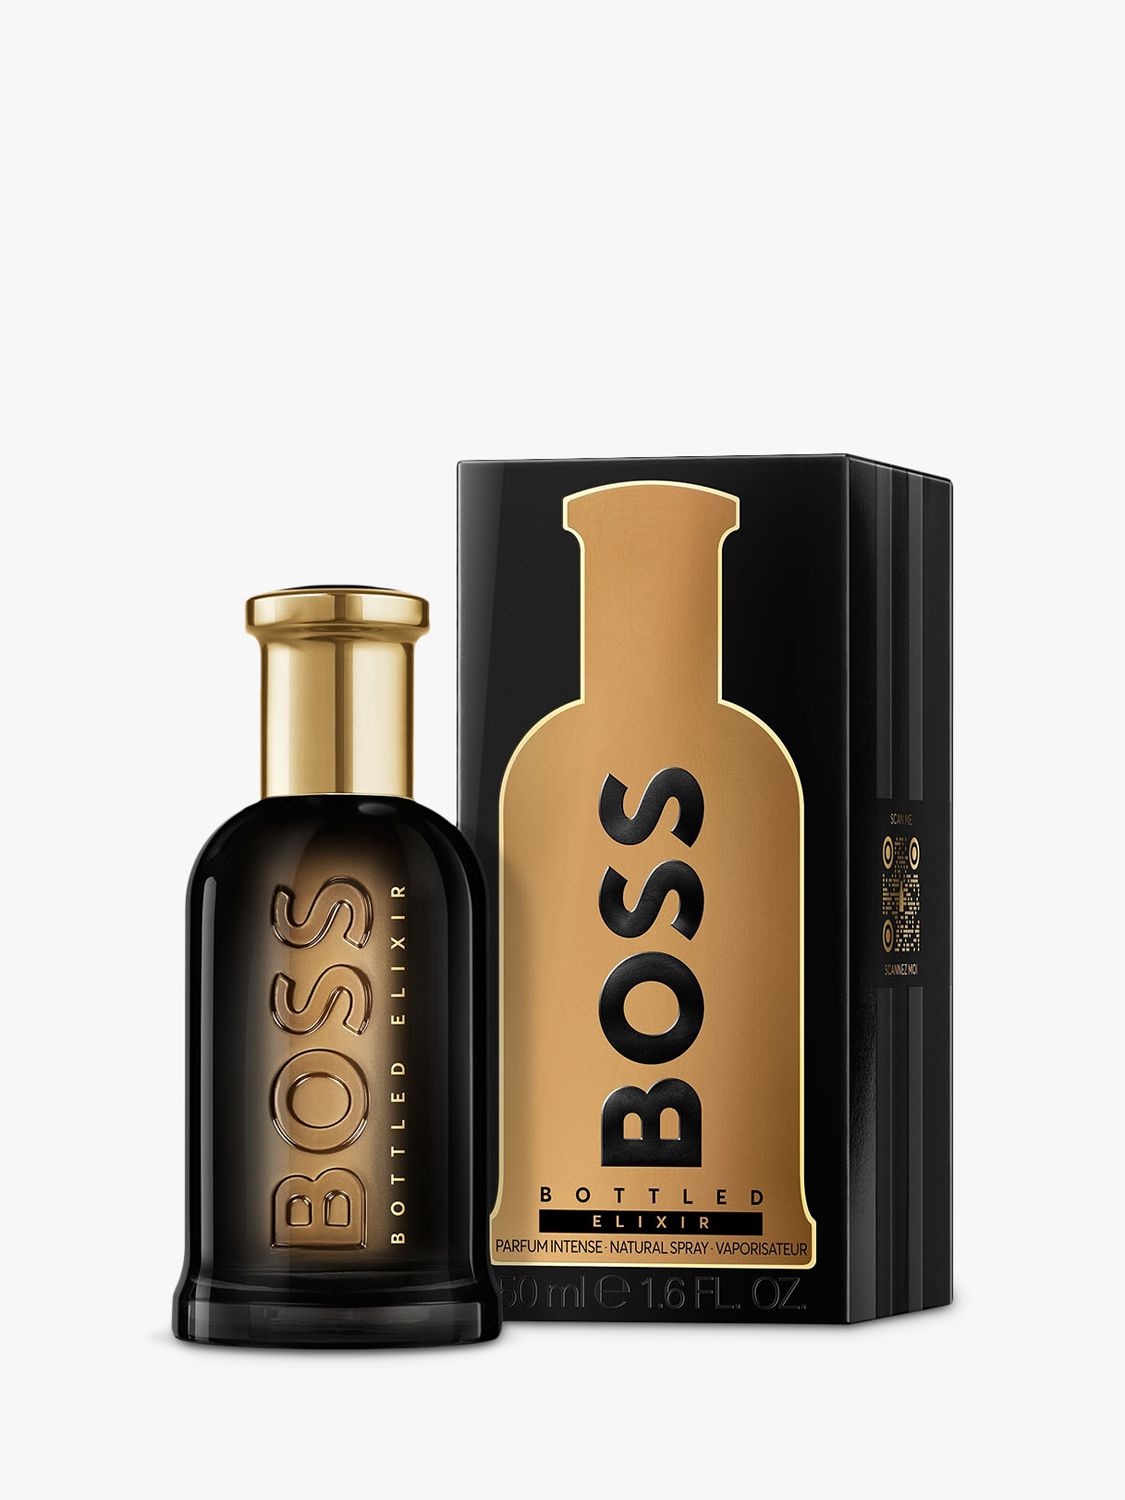 HUGO BOSS BOSS Bottled Elixir Parfum Intense, 50ml at John Lewis & Partners